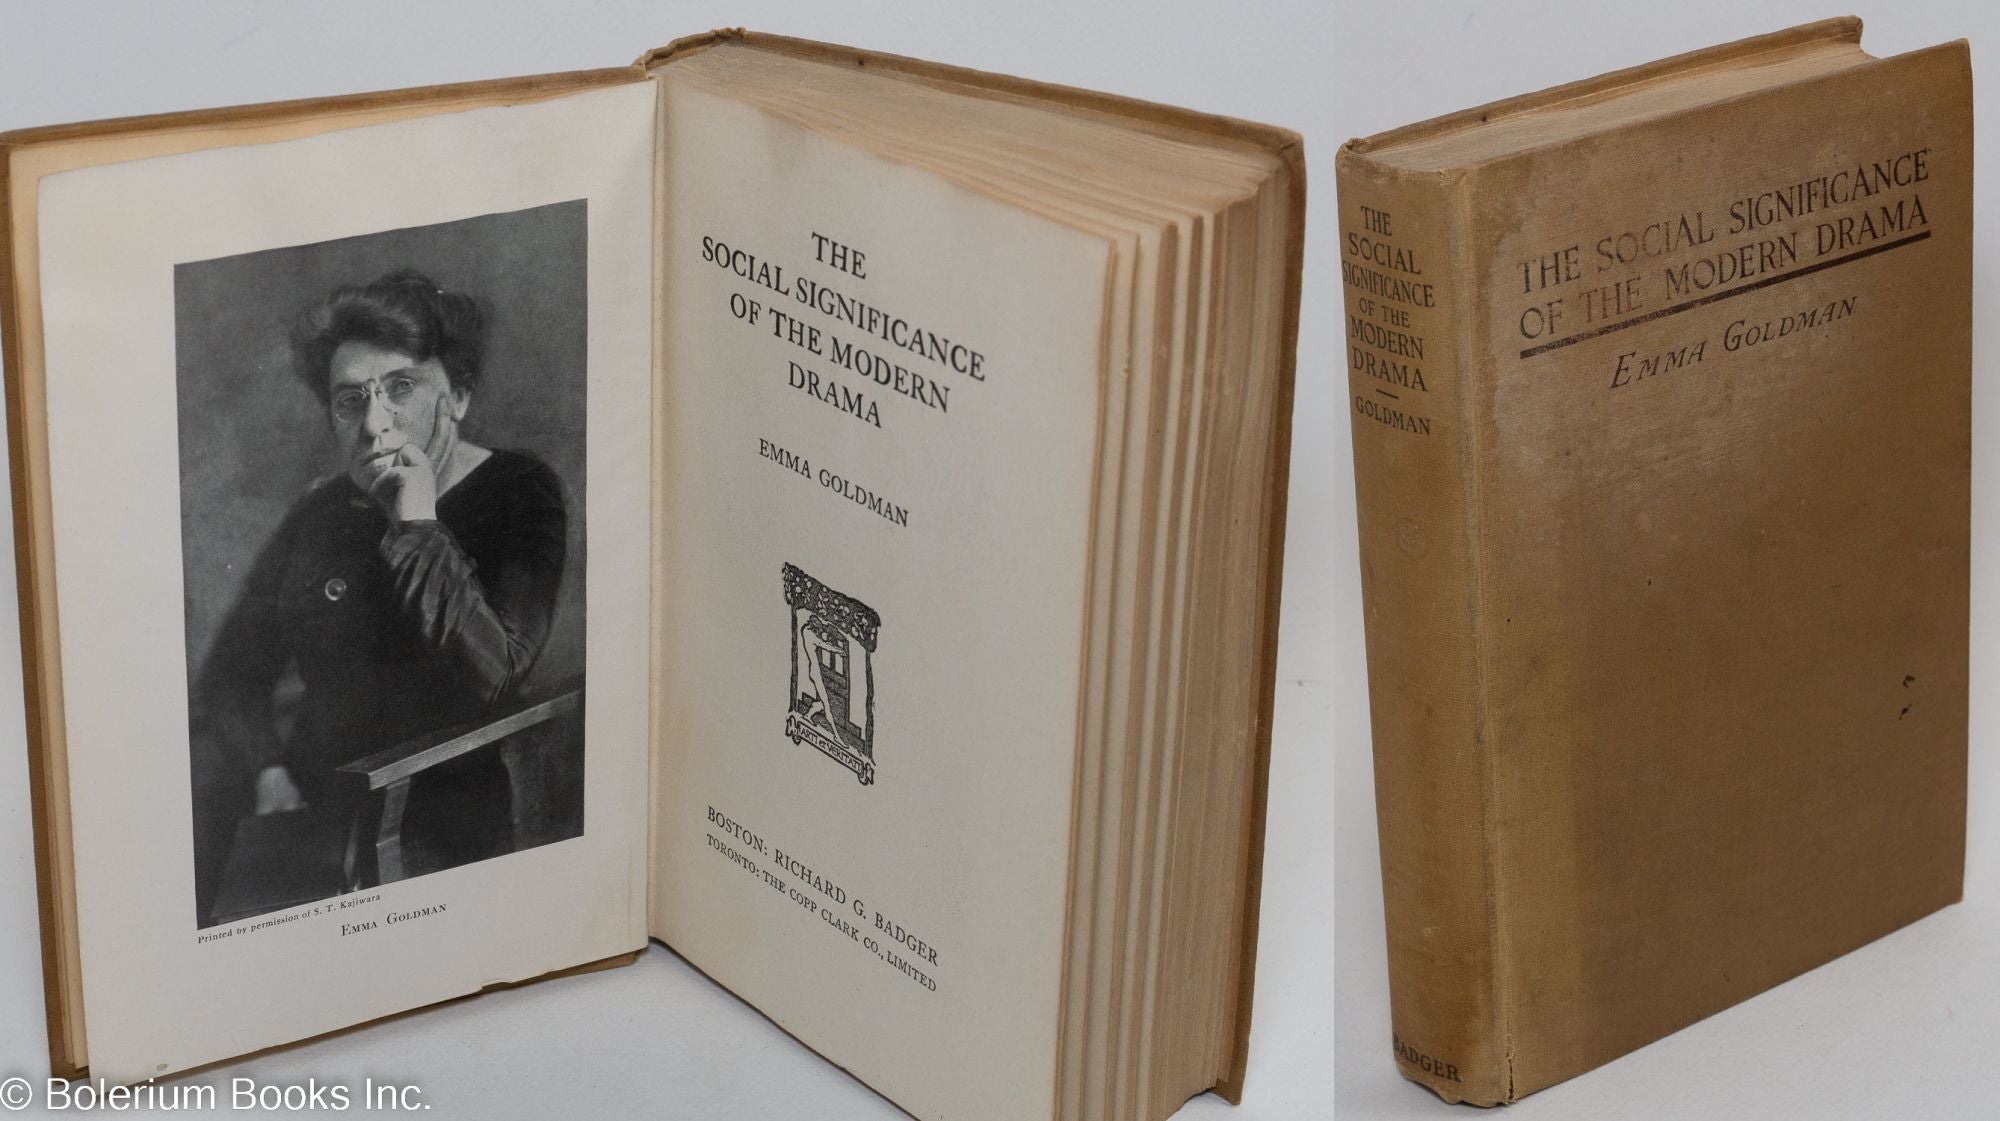 The social significance of the modern drama | Emma Goldman